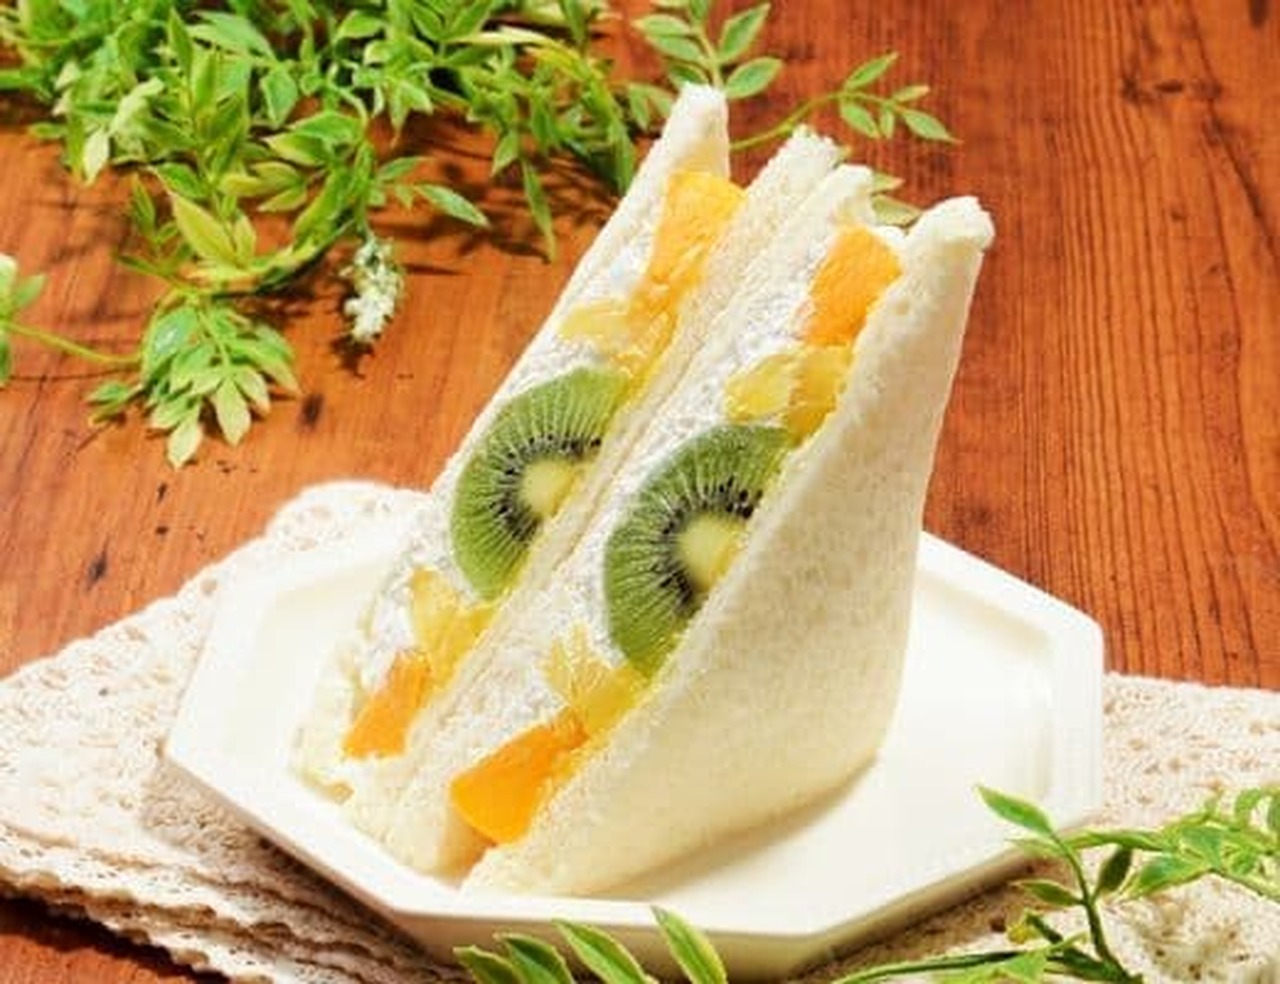 Lawson "Fruit Mix Sandwich (with orange jelly)"